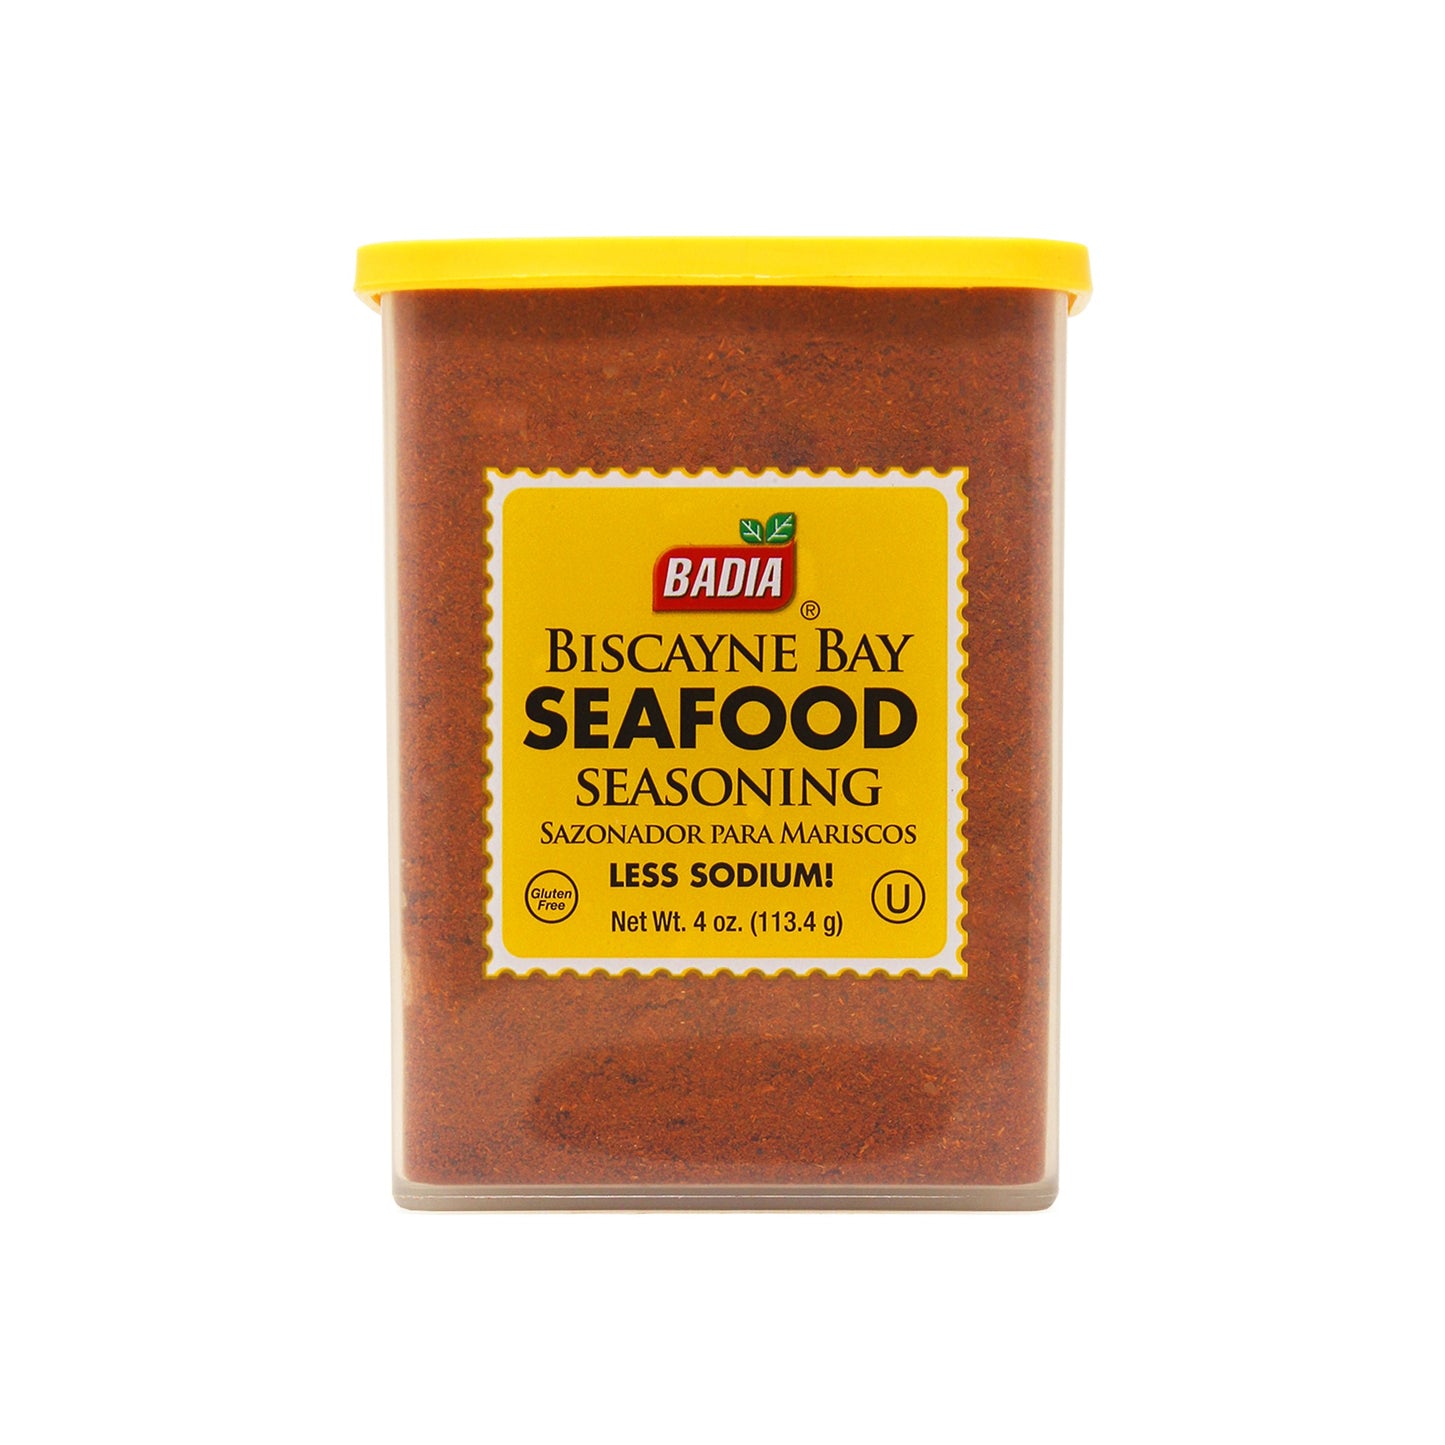 Biscayne Bay Seafood Seasoning 4oz 00397